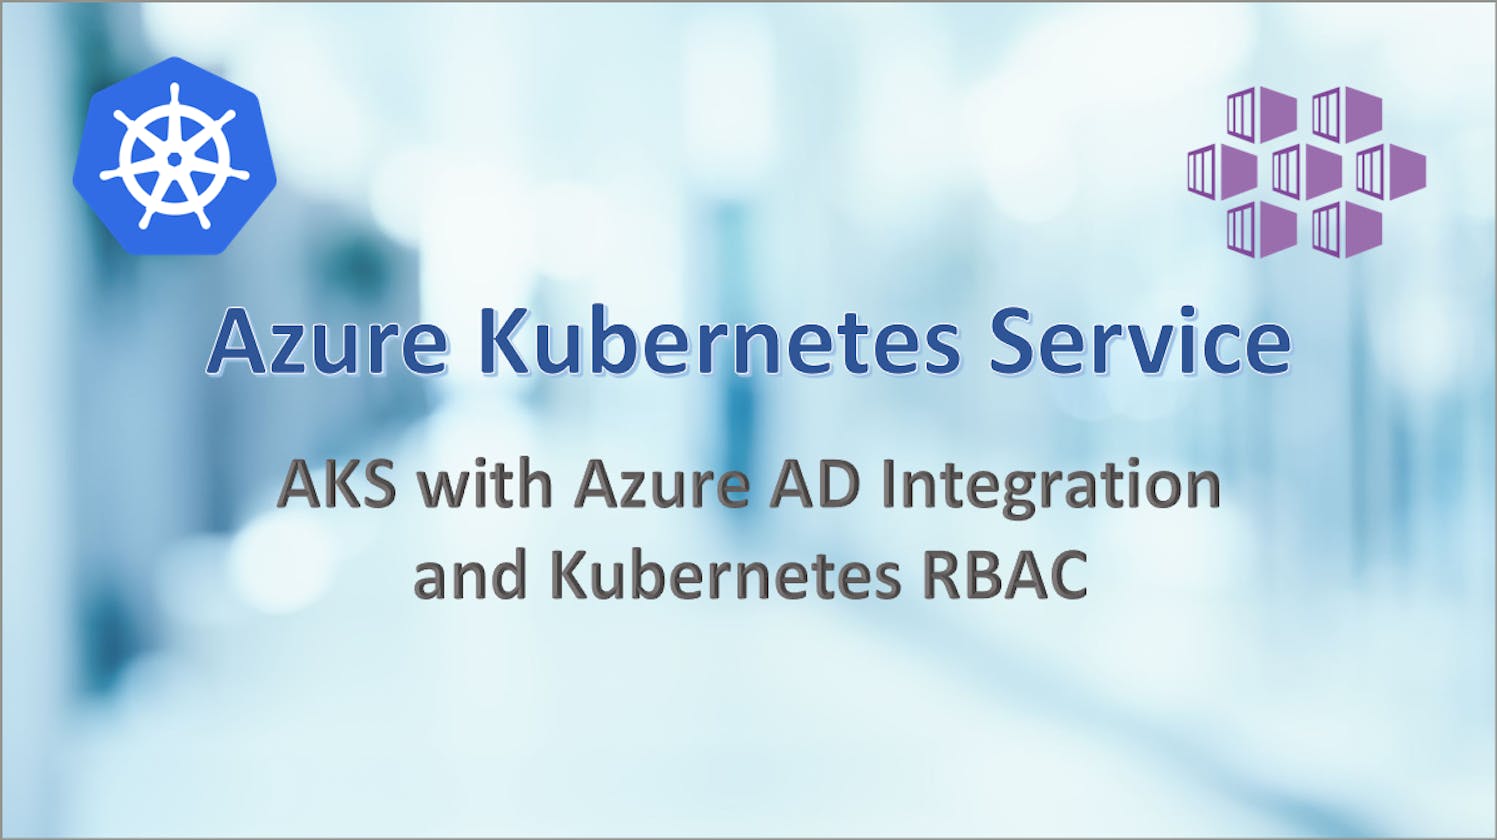 AKS with AAD Integration and Kubernetes RBAC- Access kubernetes using service principal and kubeconfig